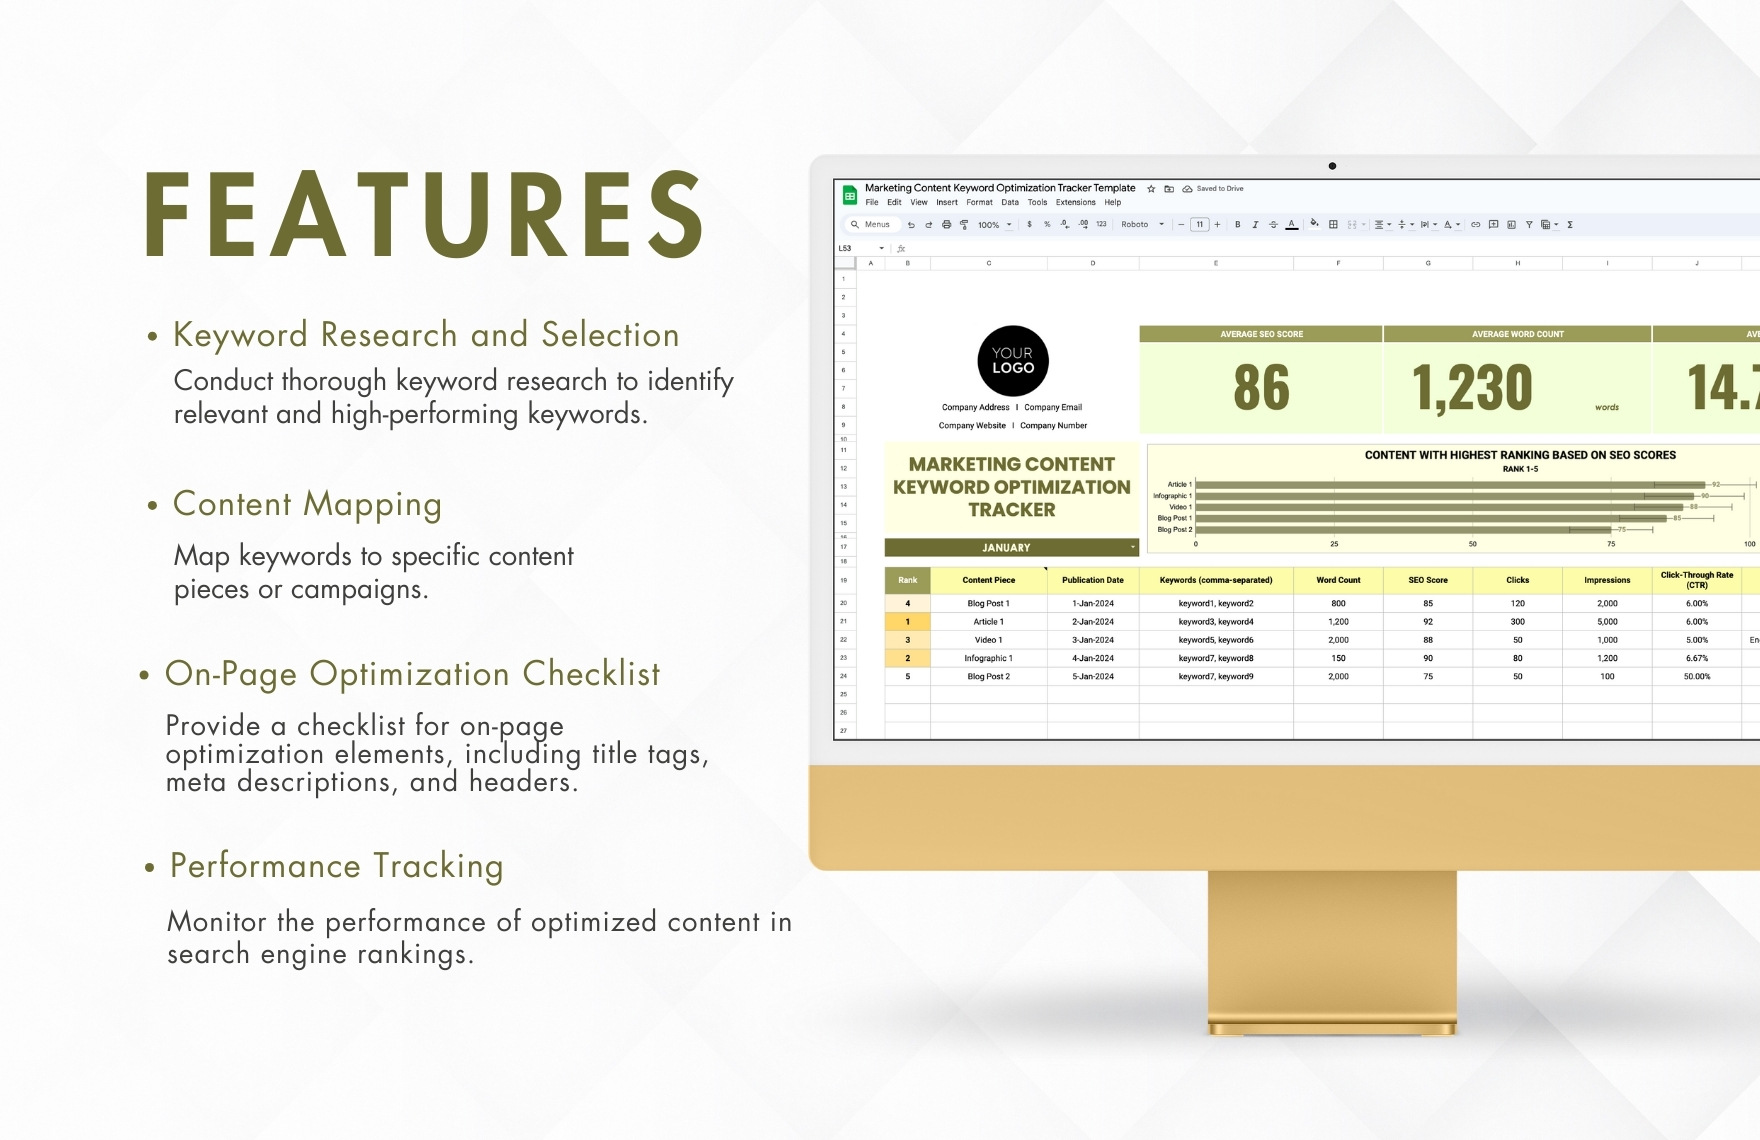 Marketing Content Keyword Optimization Tracker Template